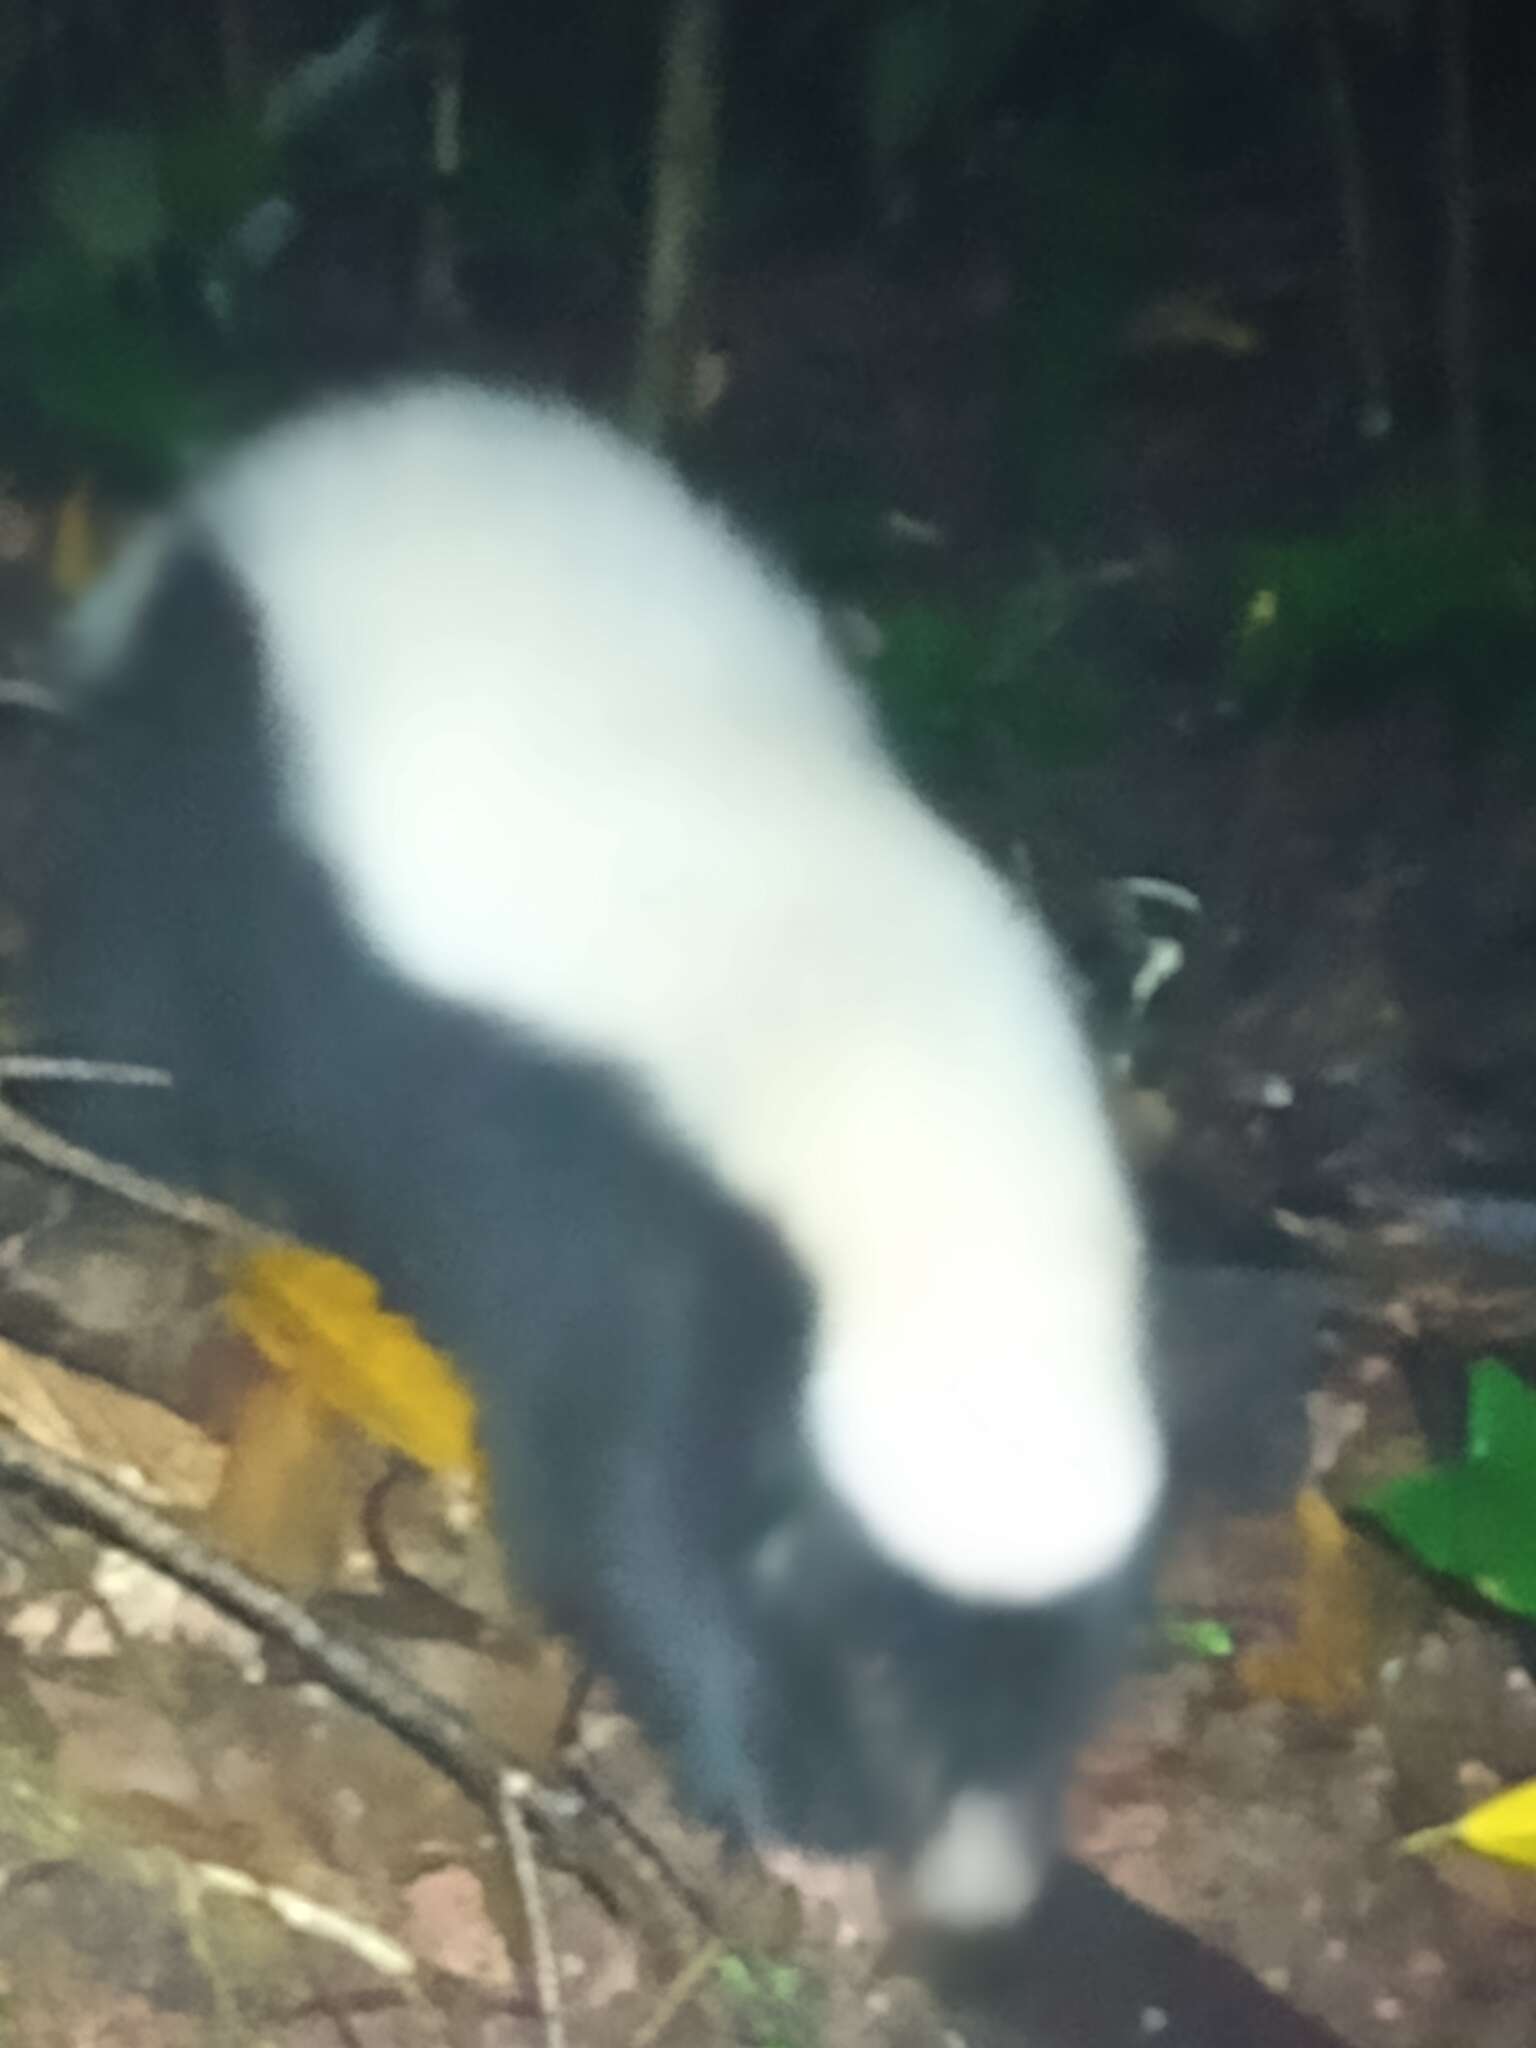 Image of eastern hog-nosed skunk